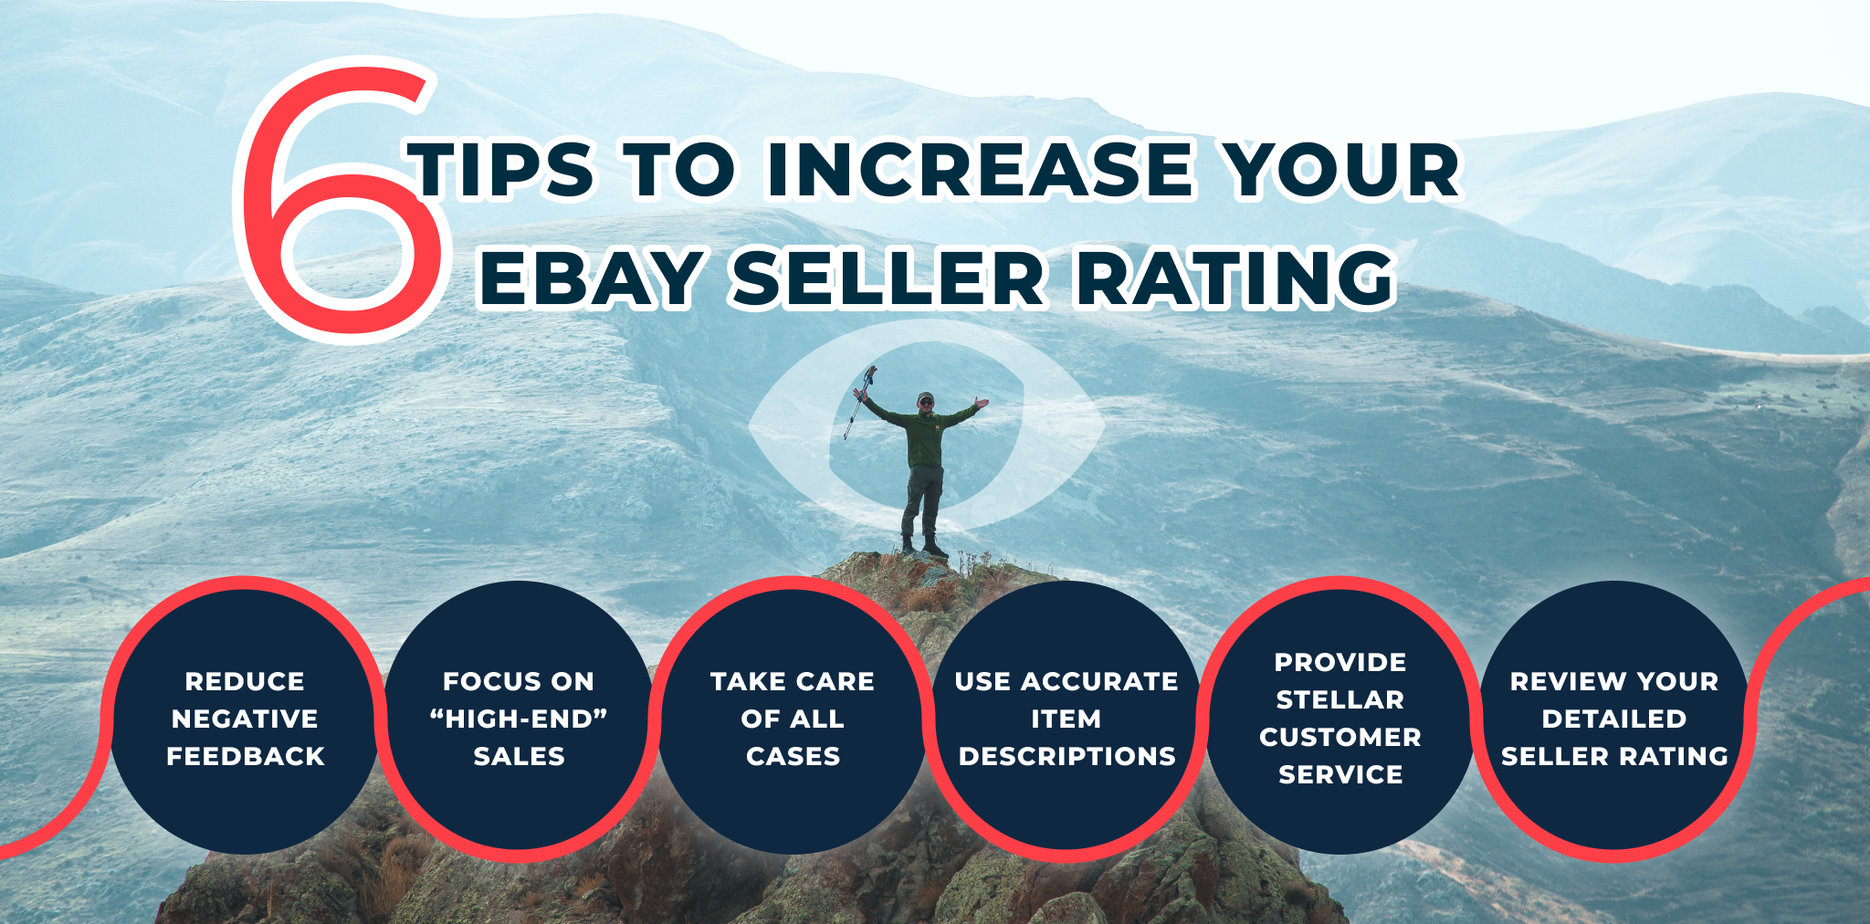 https://www.zikanalytics.com/blog/wp-content/uploads/2023/02/How_to_become_-top_rated_seller_on_eBay.jpg